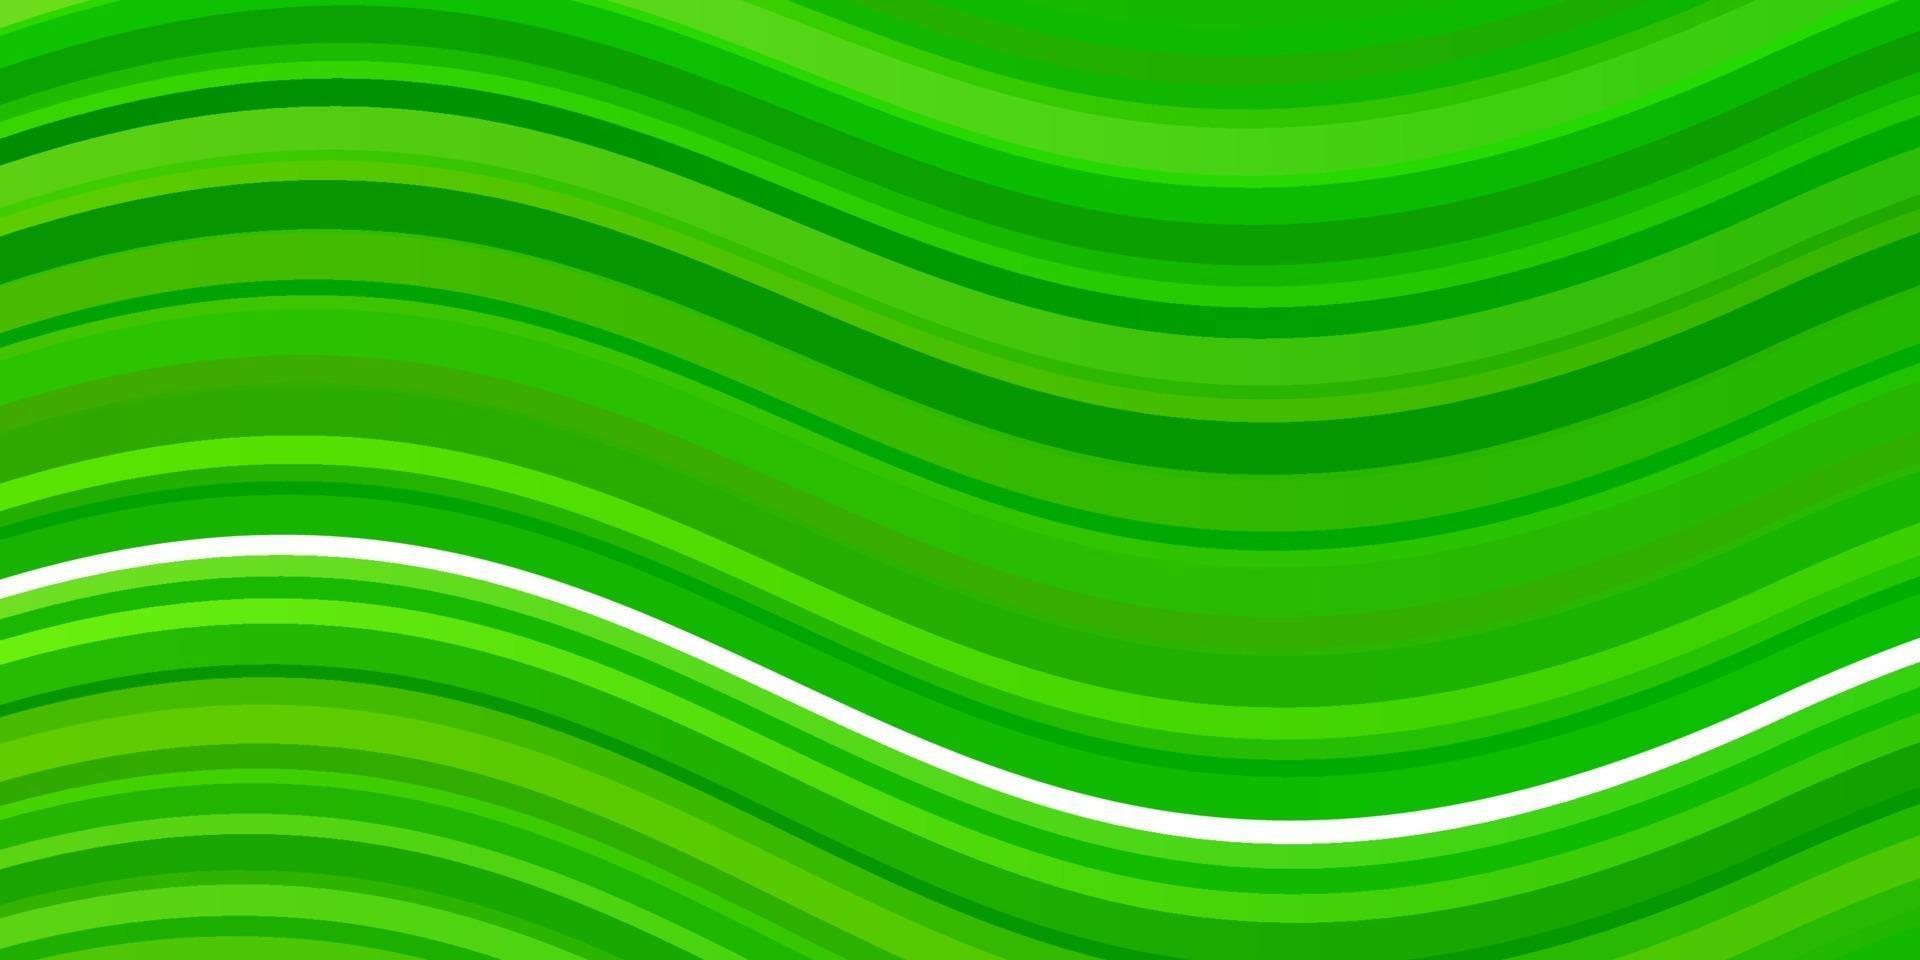 Fondo de vector verde claro con líneas dobladas.